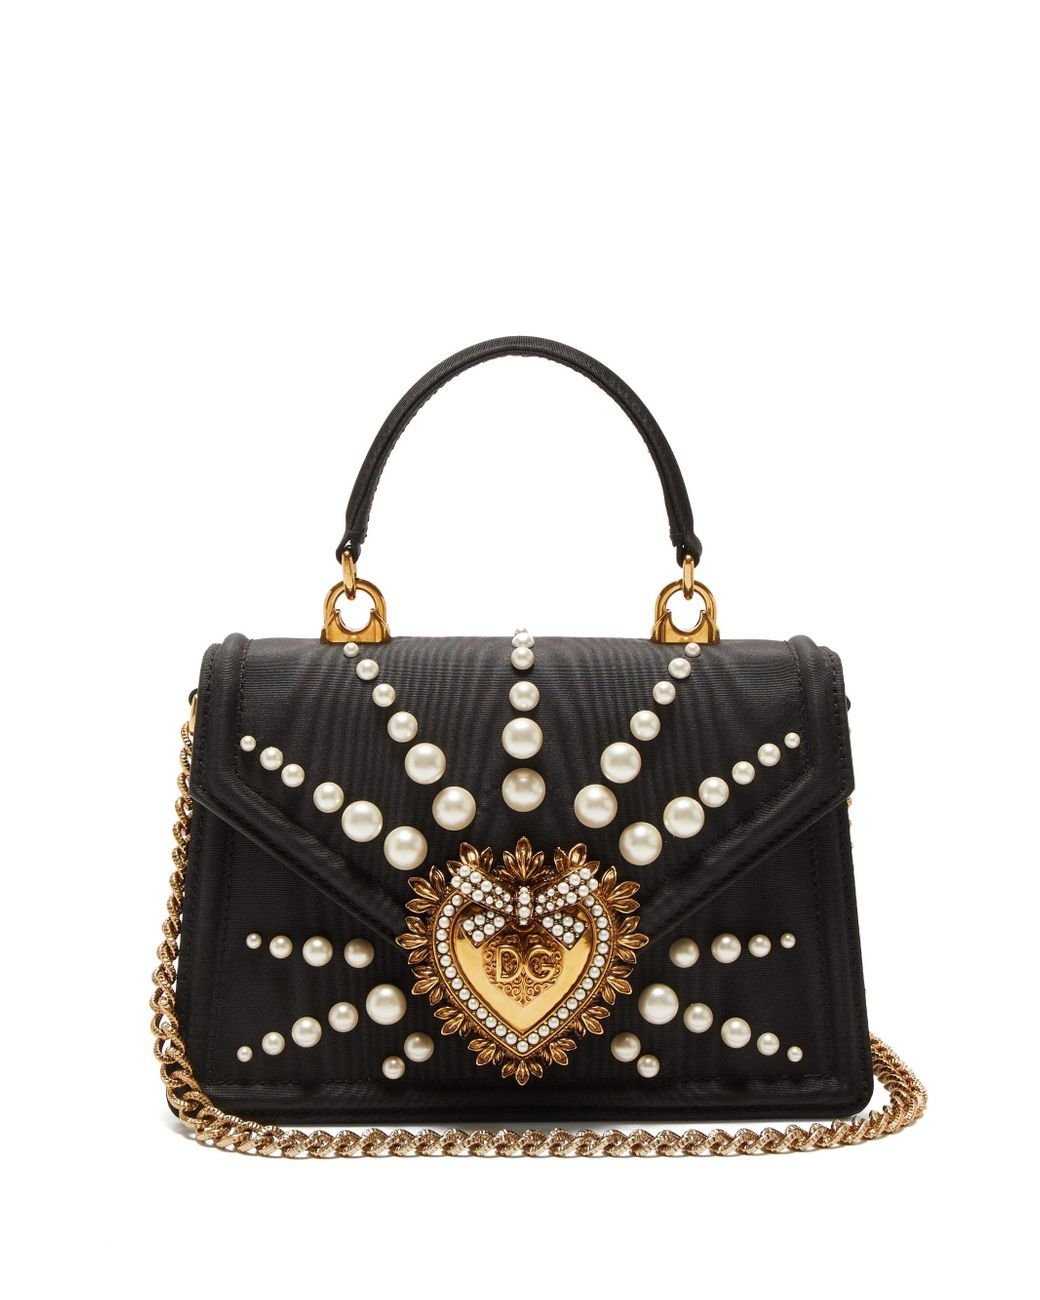 Dolce & Gabbana Devotion Faux Pearl-embellished Moire Bag in Black